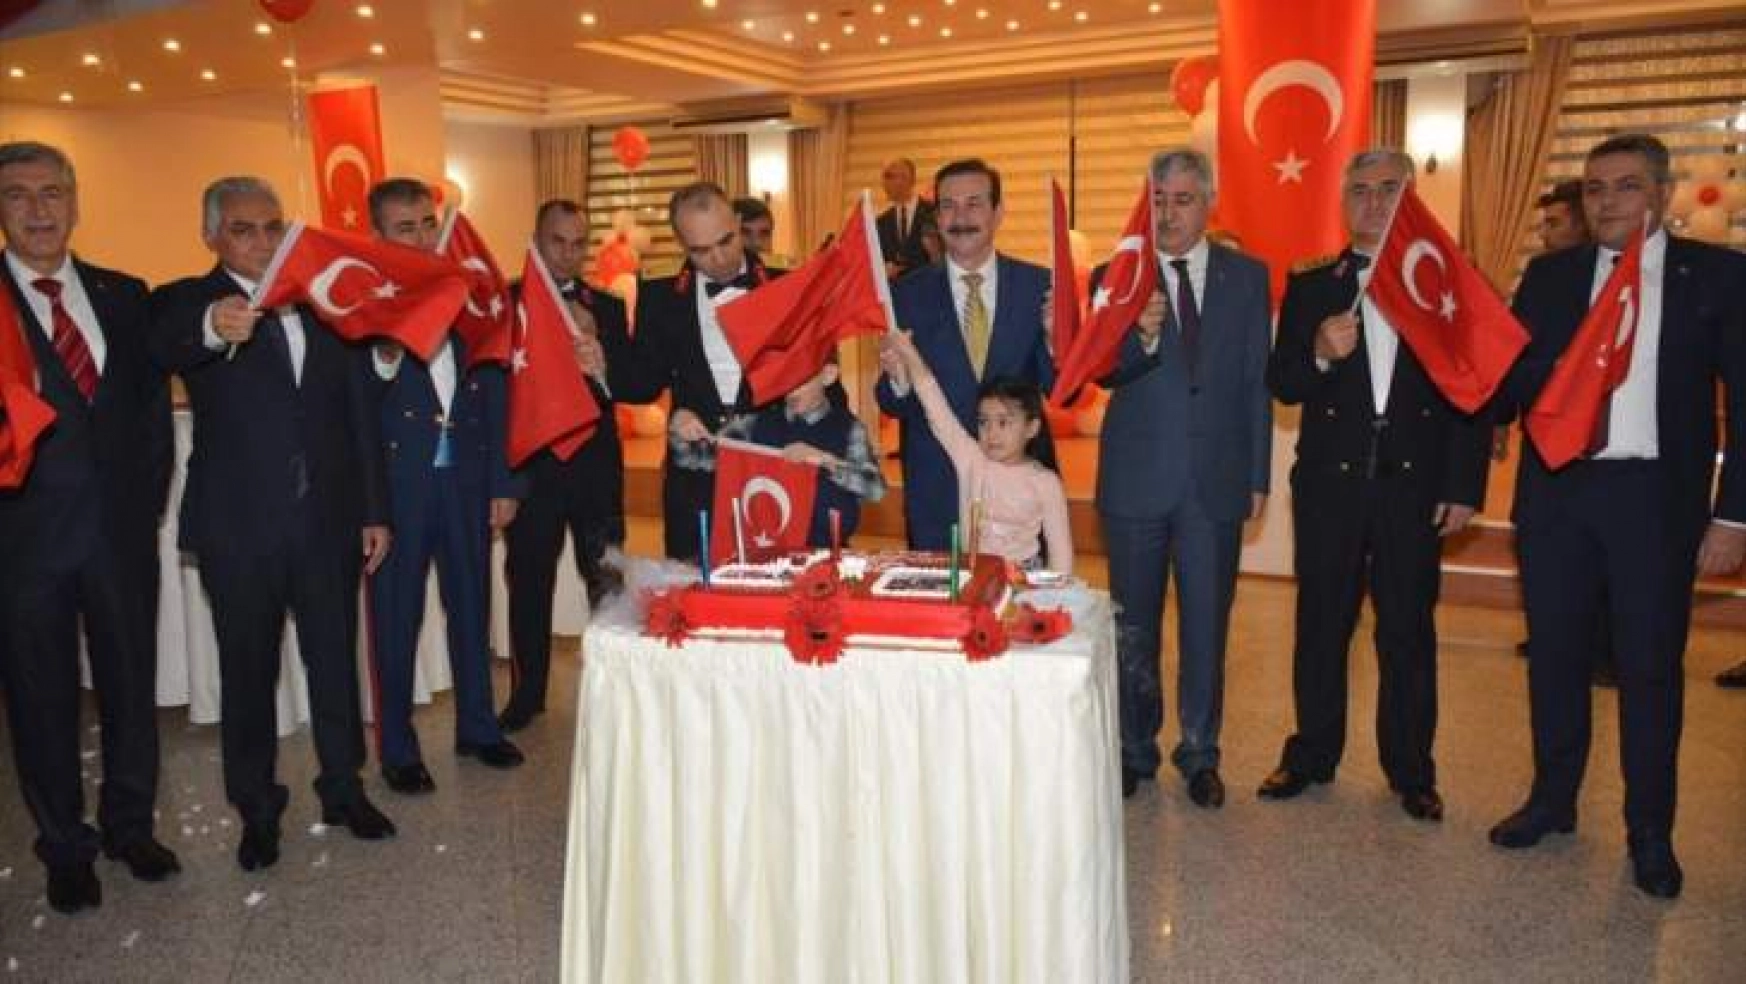 Malatya'da 29 Ekim Cumhuriyet resepsiyon düzenlendi